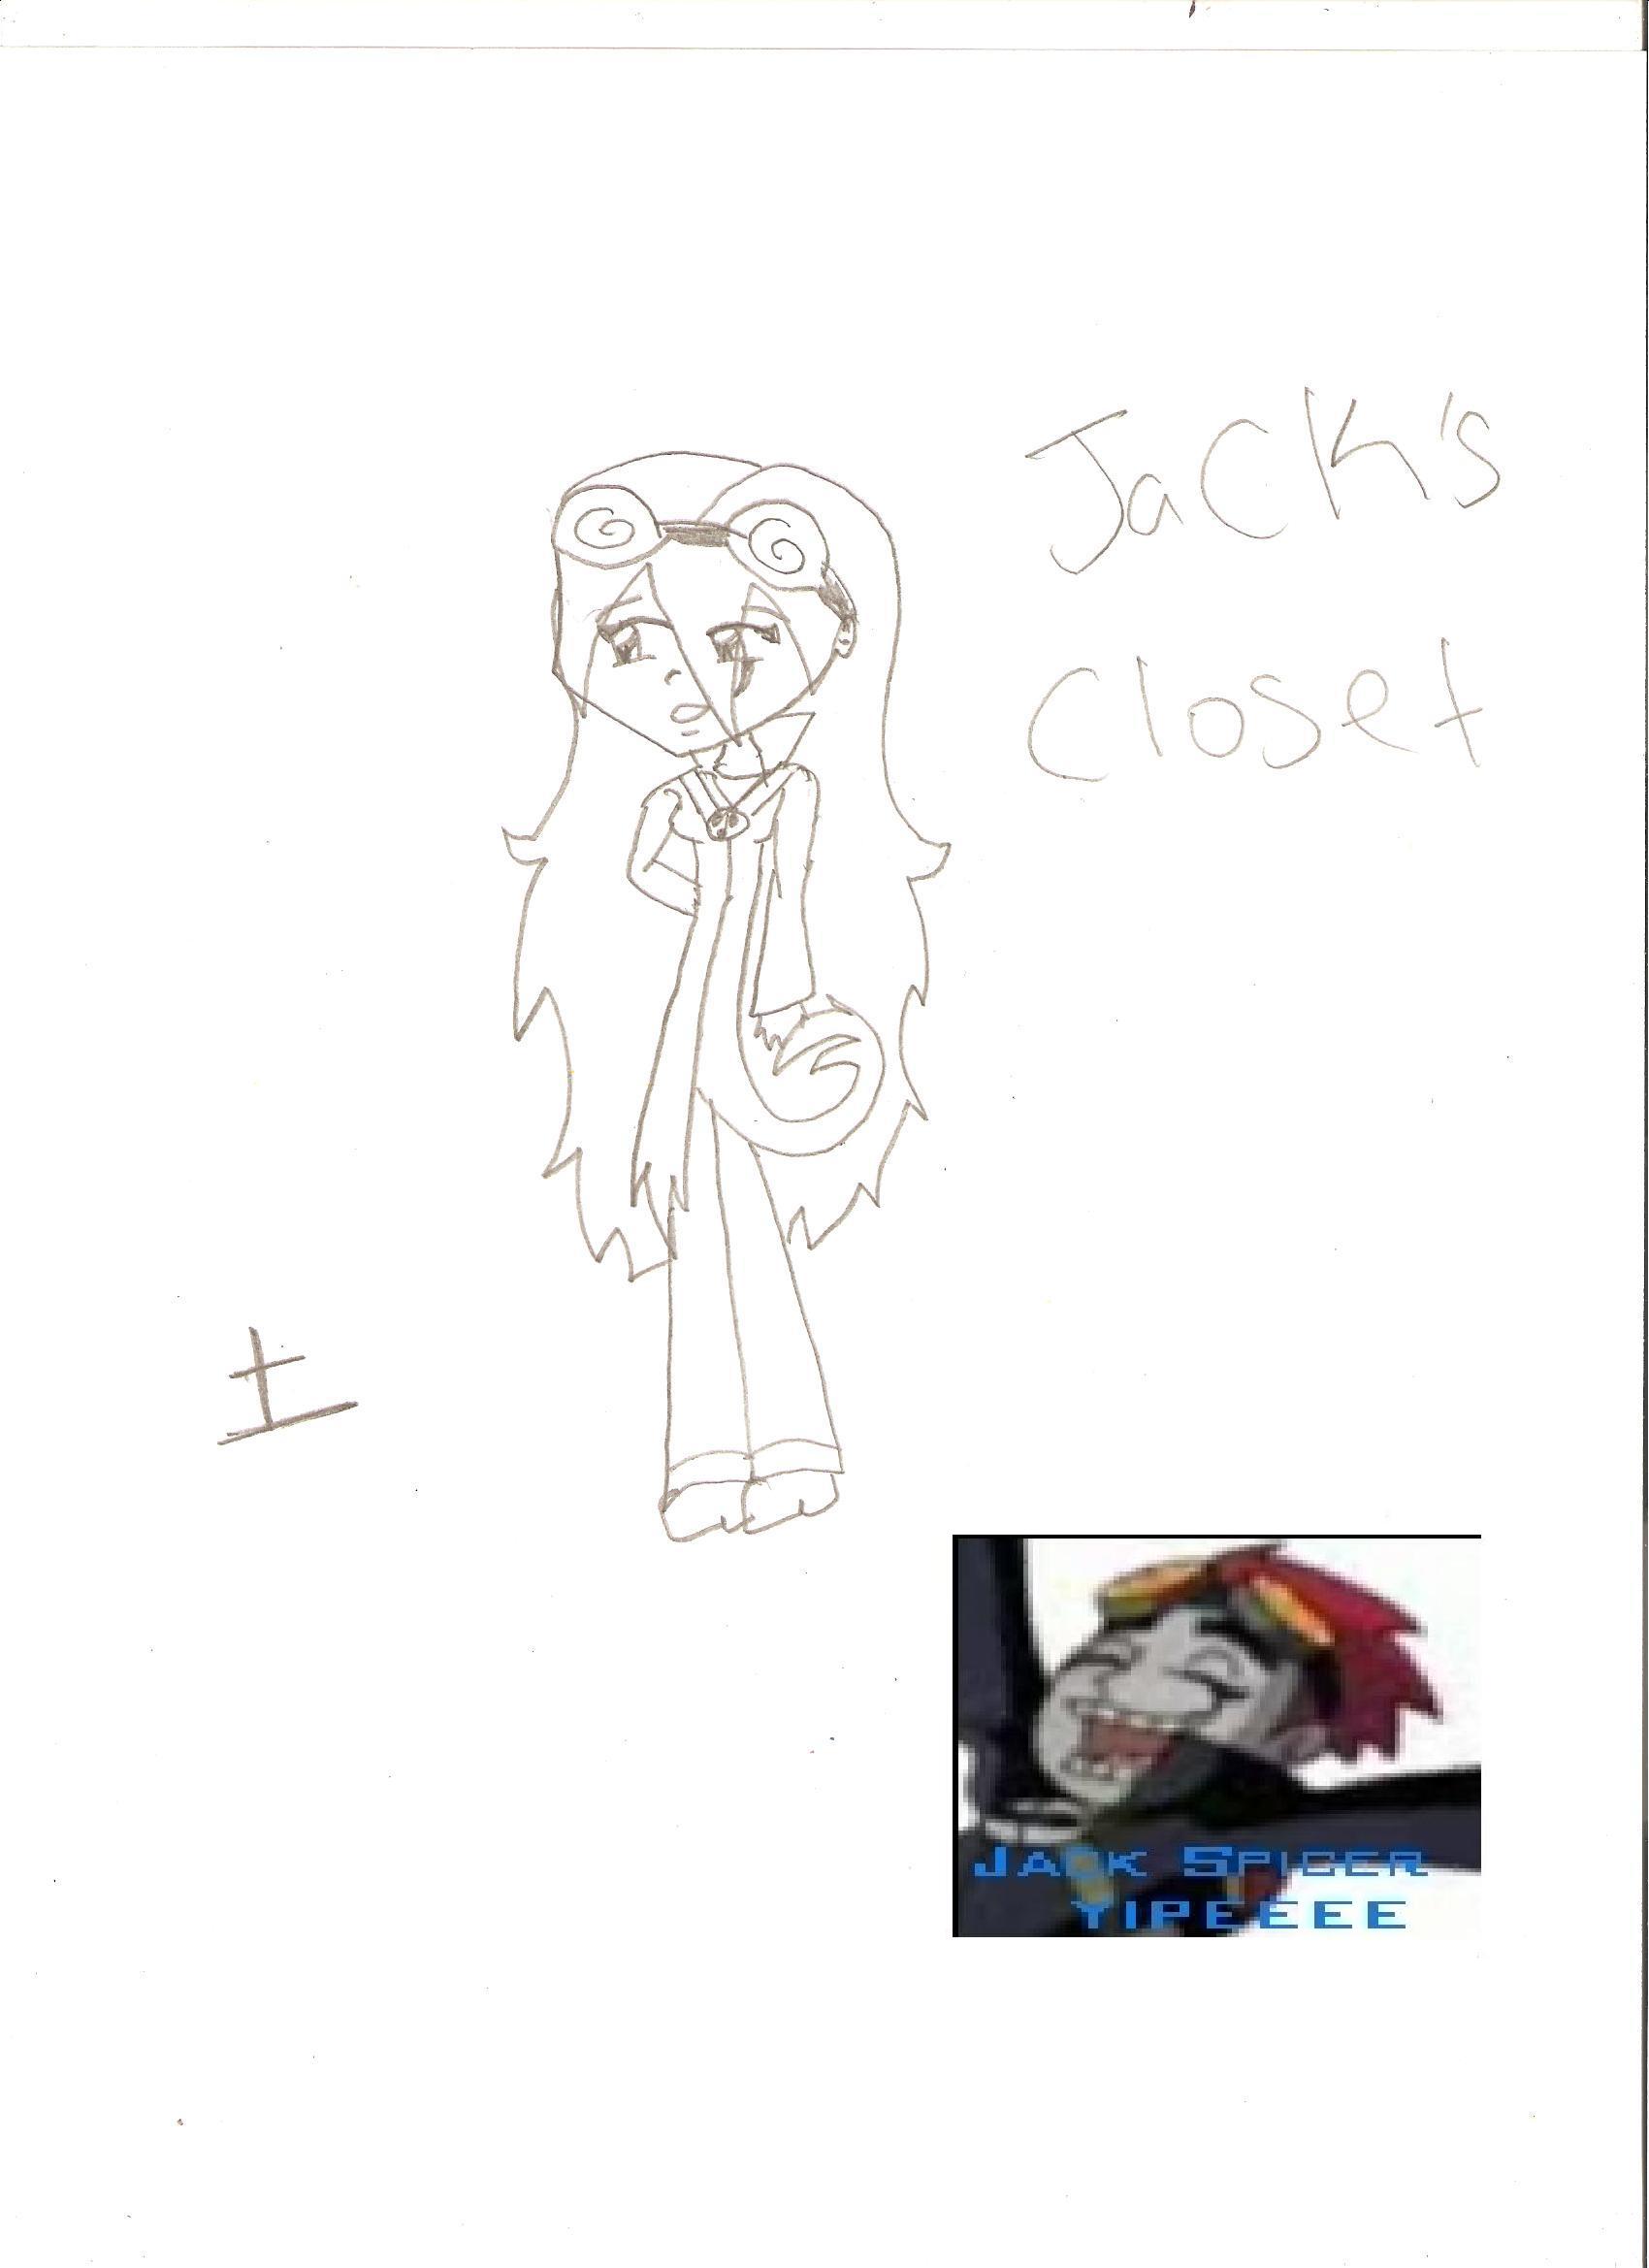 Jack's Closet by SkyGirl